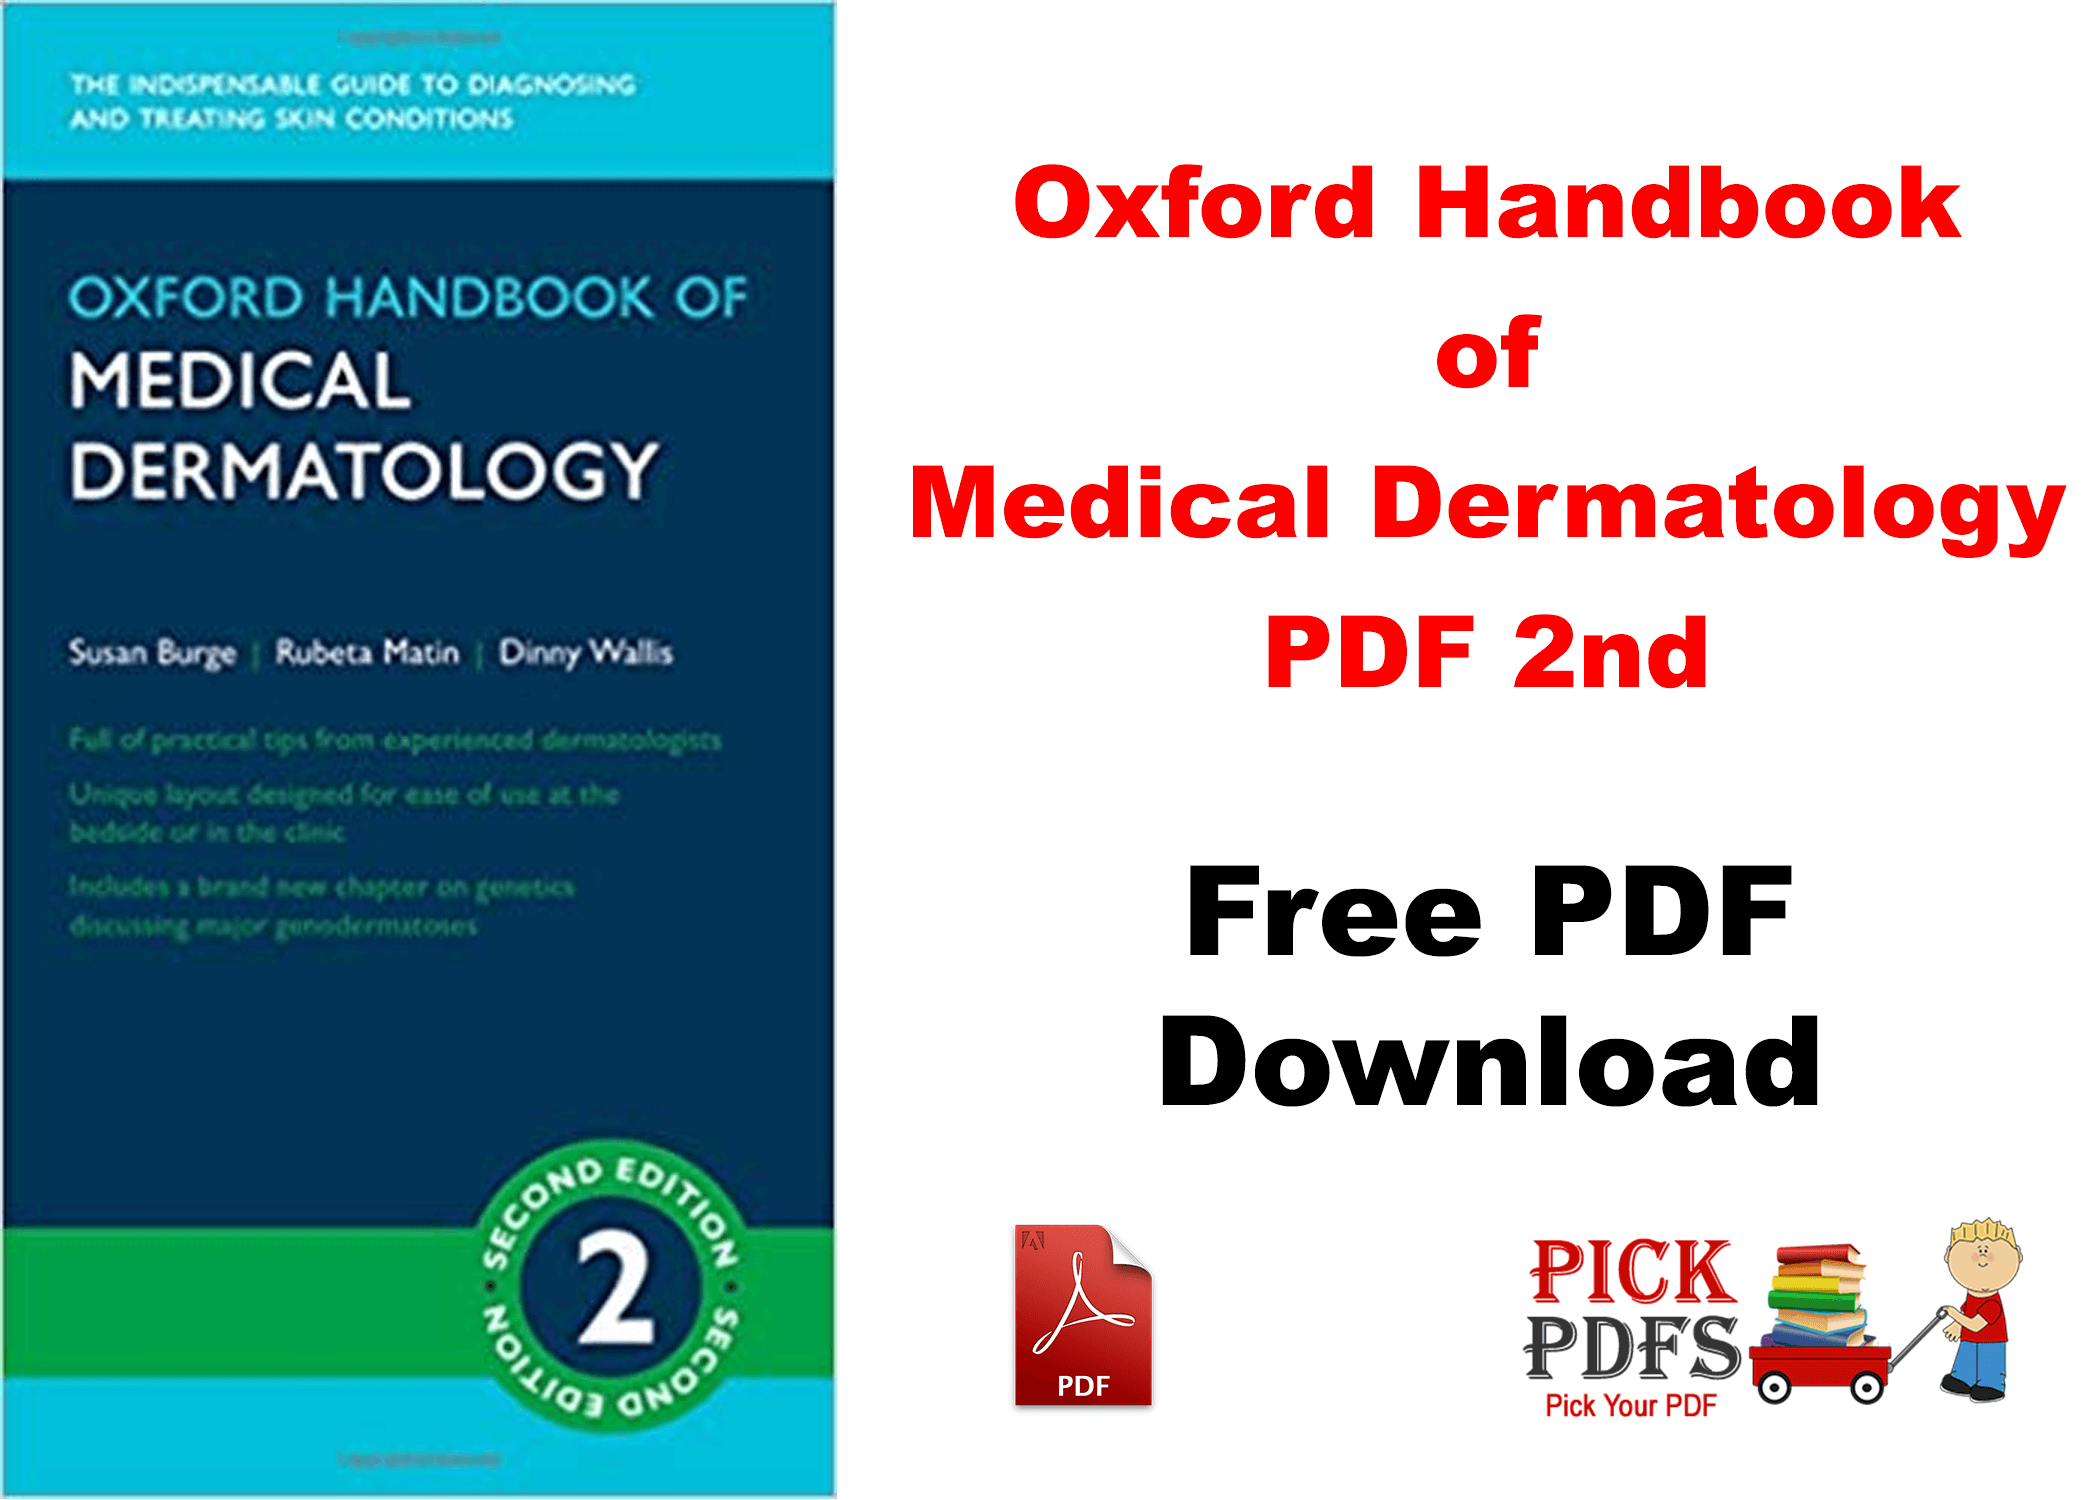 https://pickpdfs.com/oxford-handbook-of-medical-dermatology-pdf-2nd-edition-free-download/